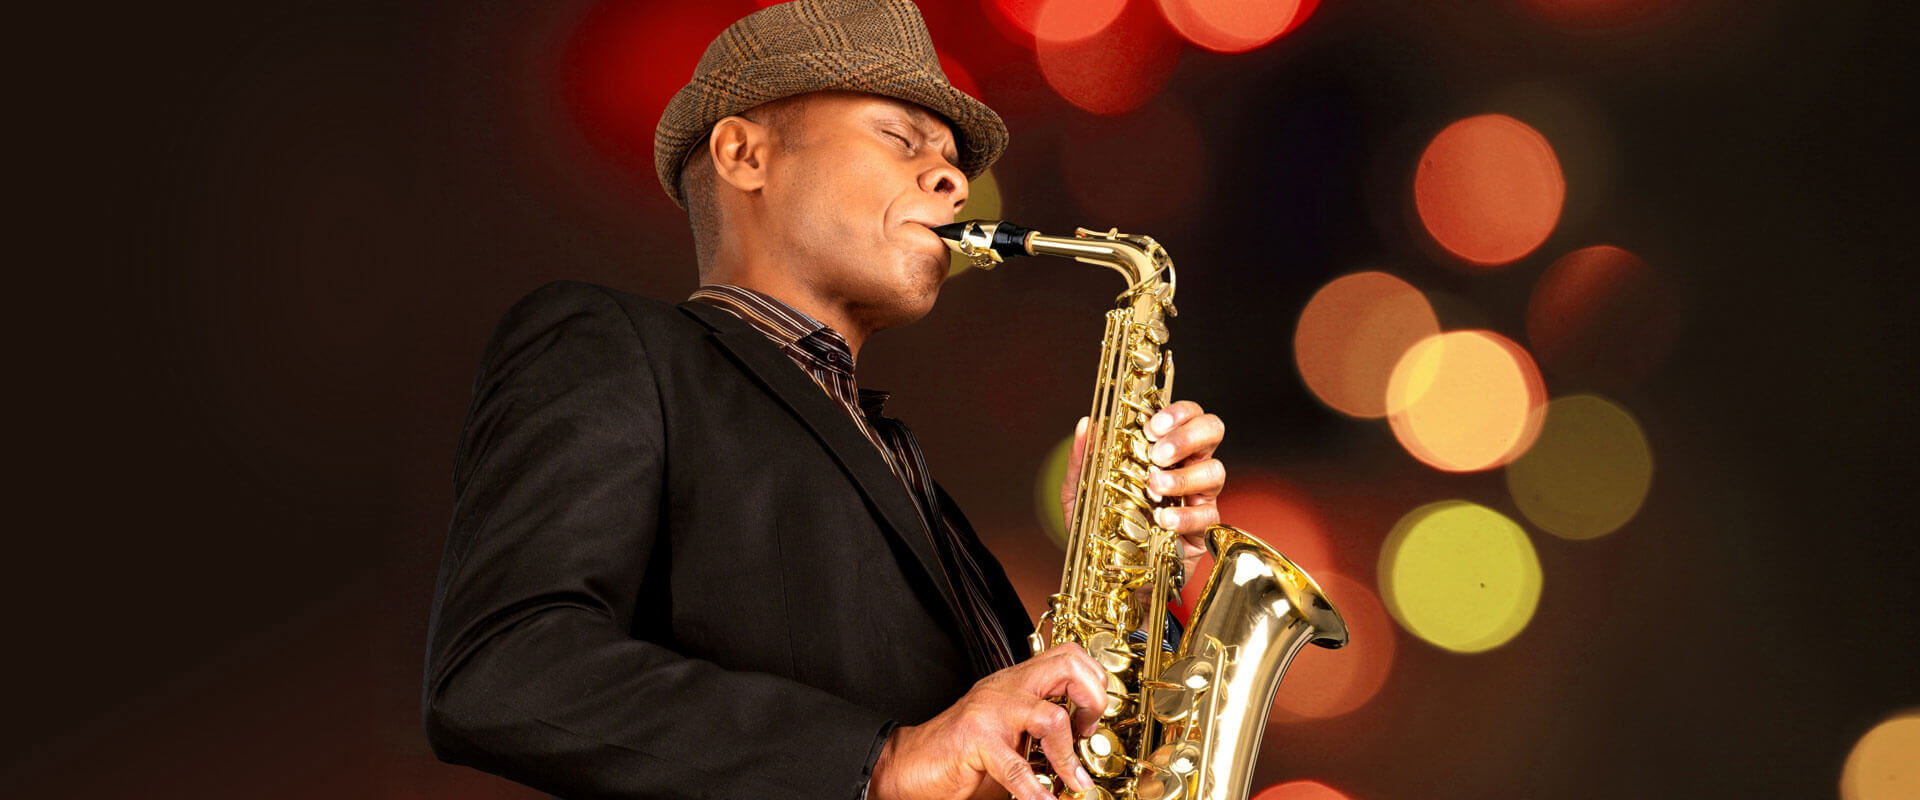 Saxophone Lessons Emeryville, CA